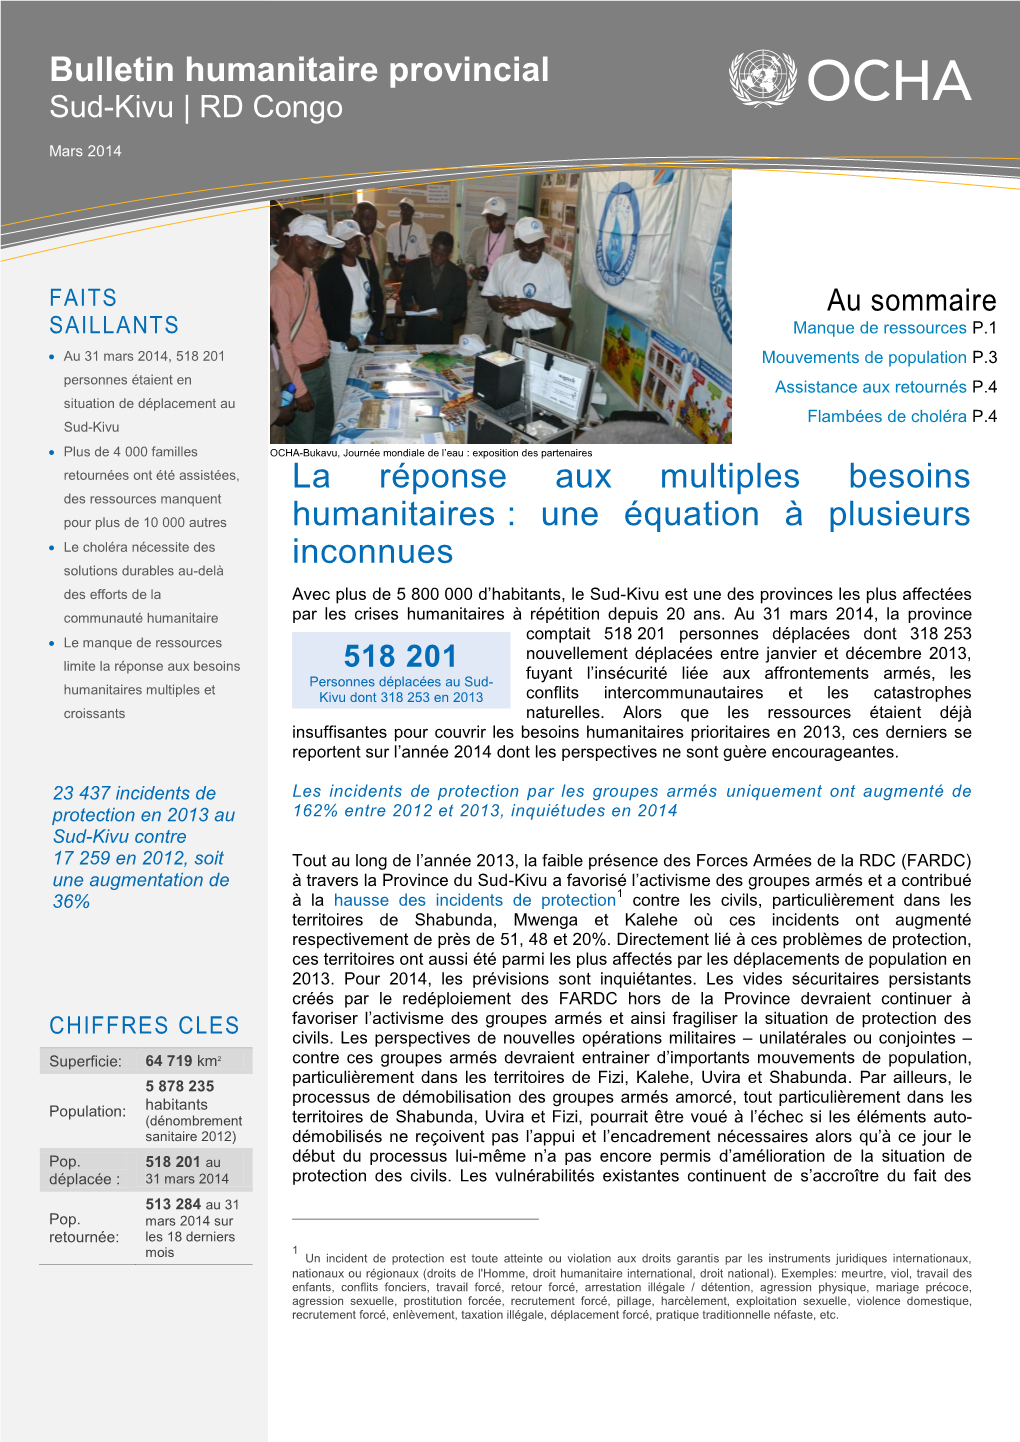 Bulletin Humanitaire Provincial